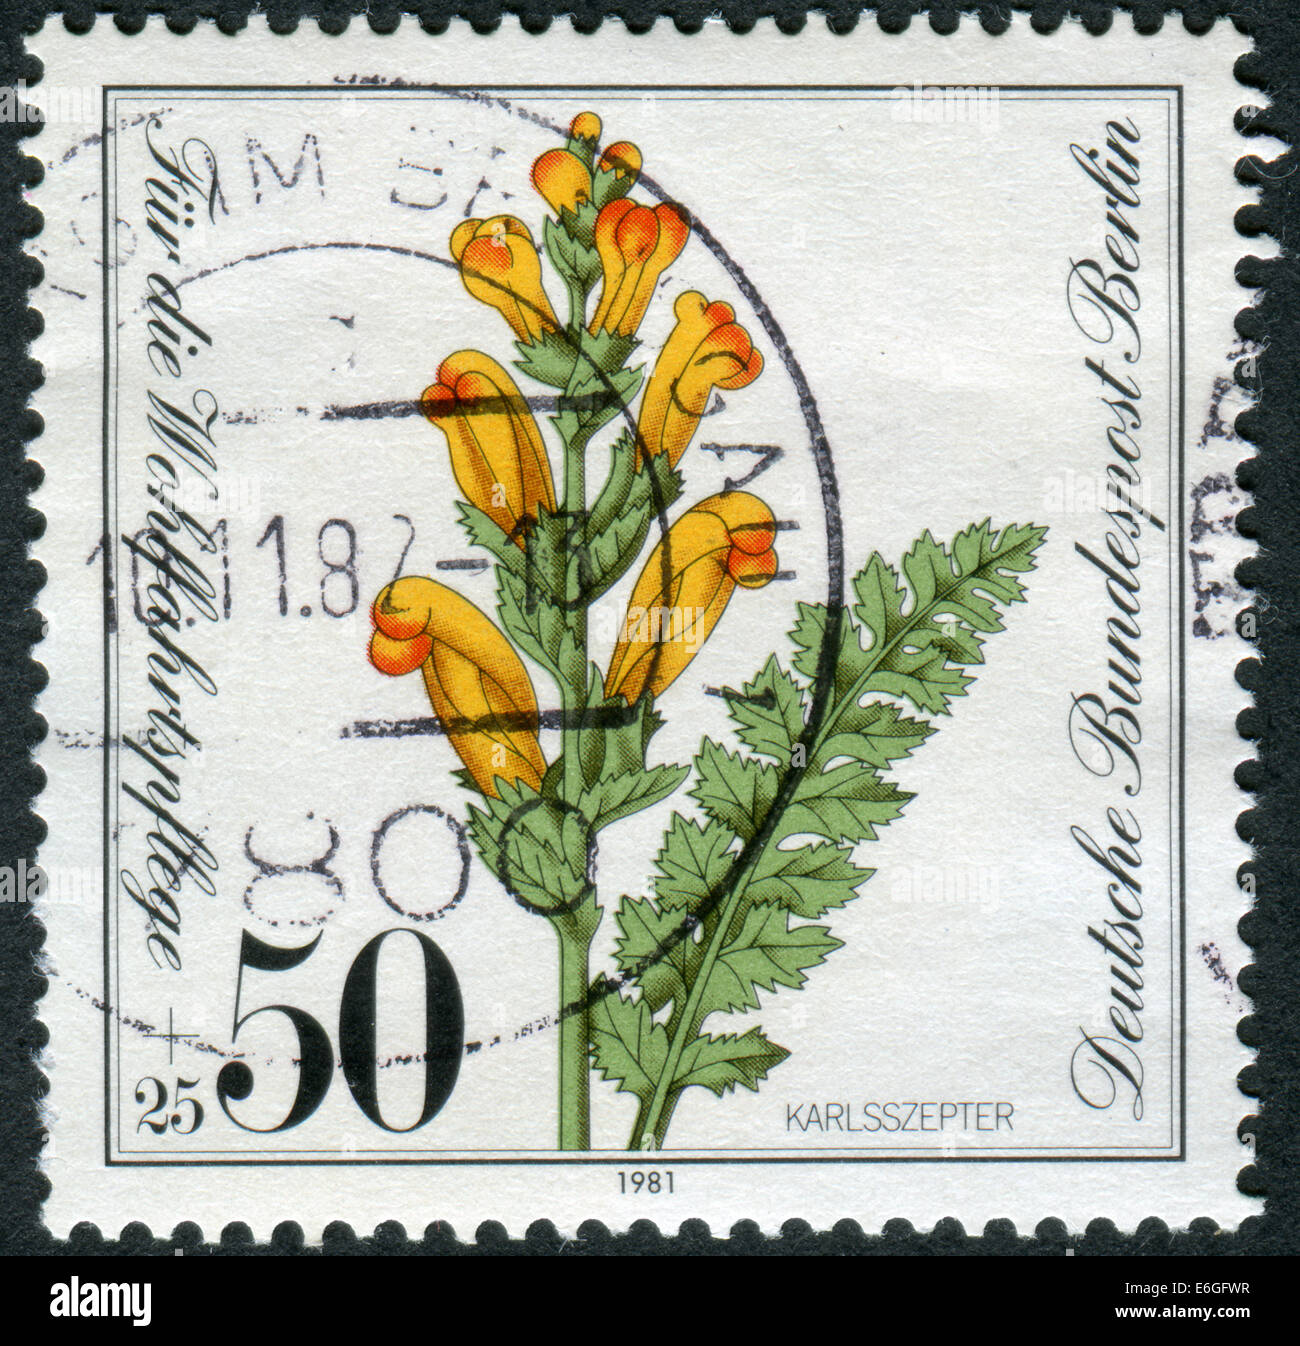 Postage stamp printed in Germany (West Berlin), shows a flowering Pedicularis sceptrum-carolinum Stock Photo